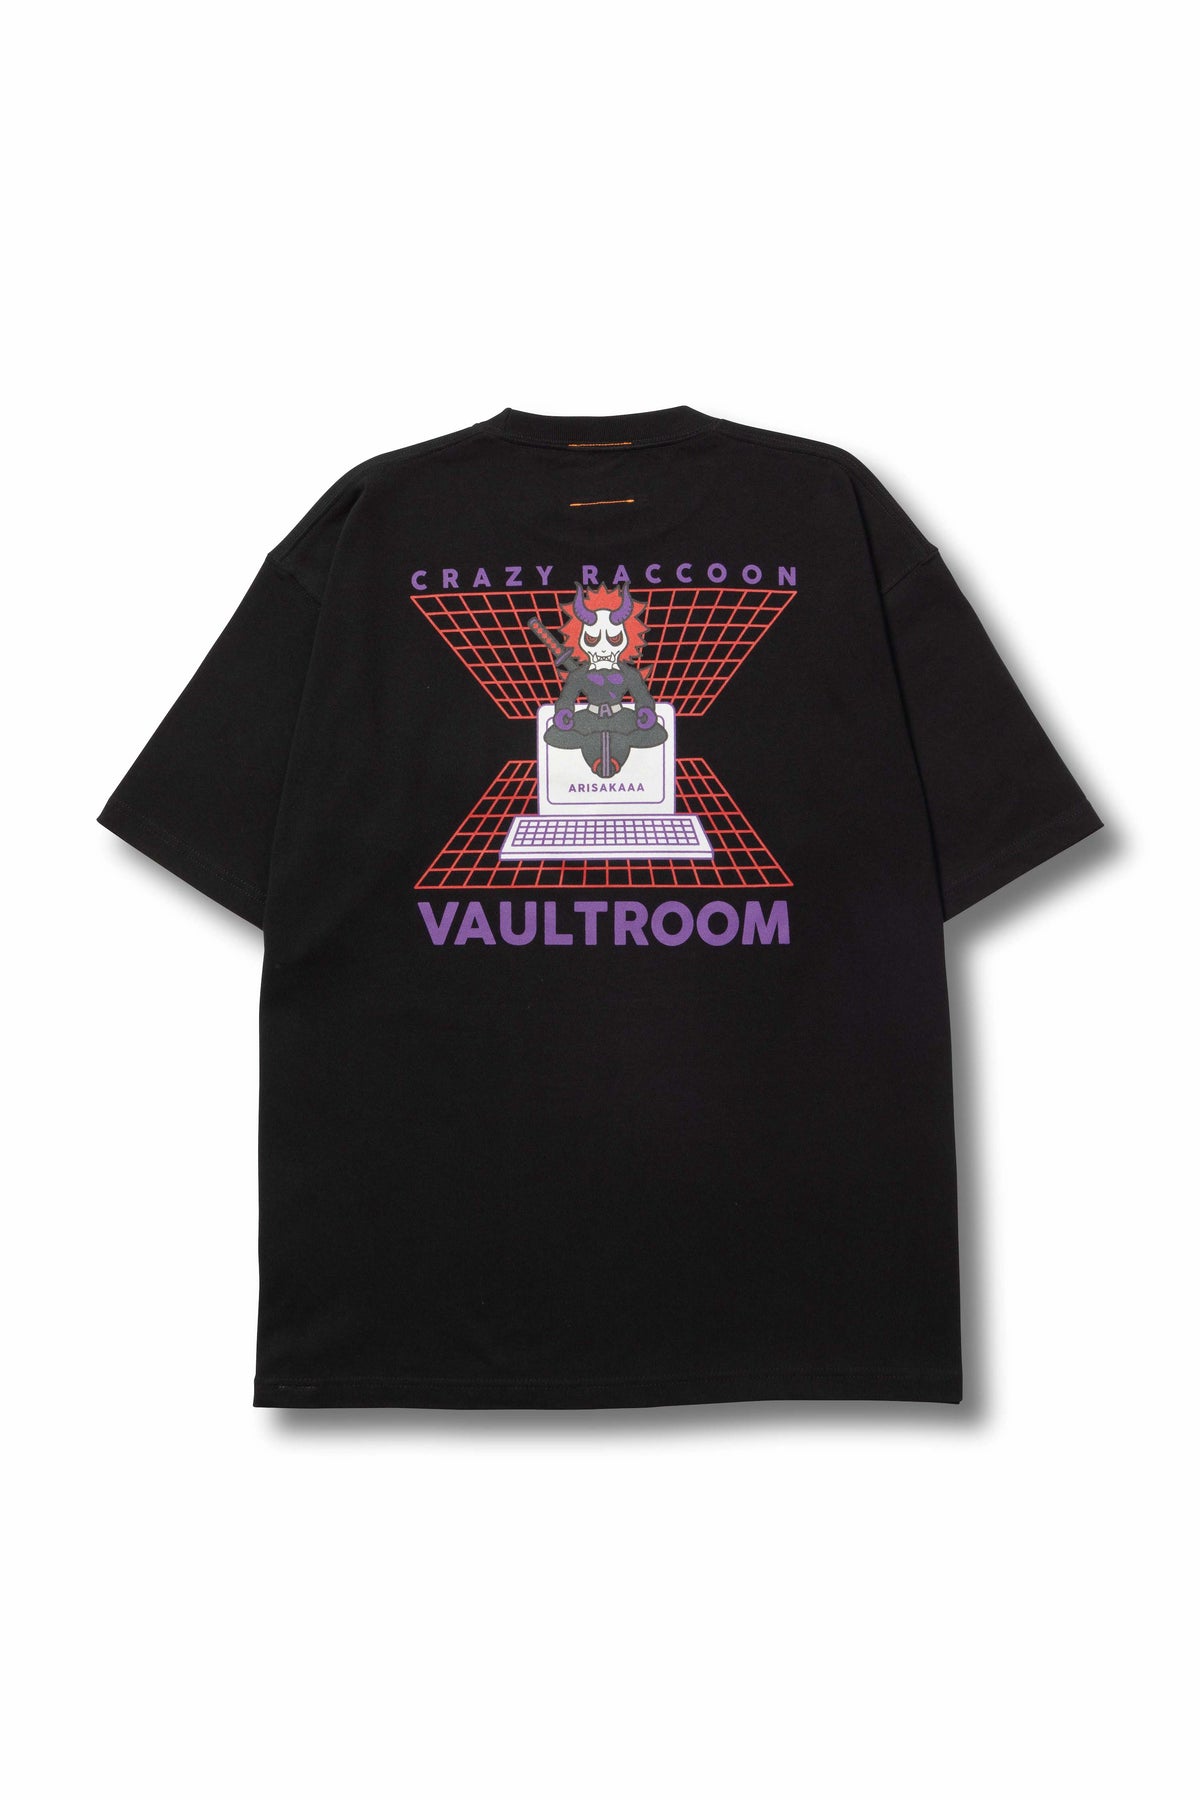 vaultroom だるまいずごっど パーカー crazy raccoon equaljustice.wy.gov